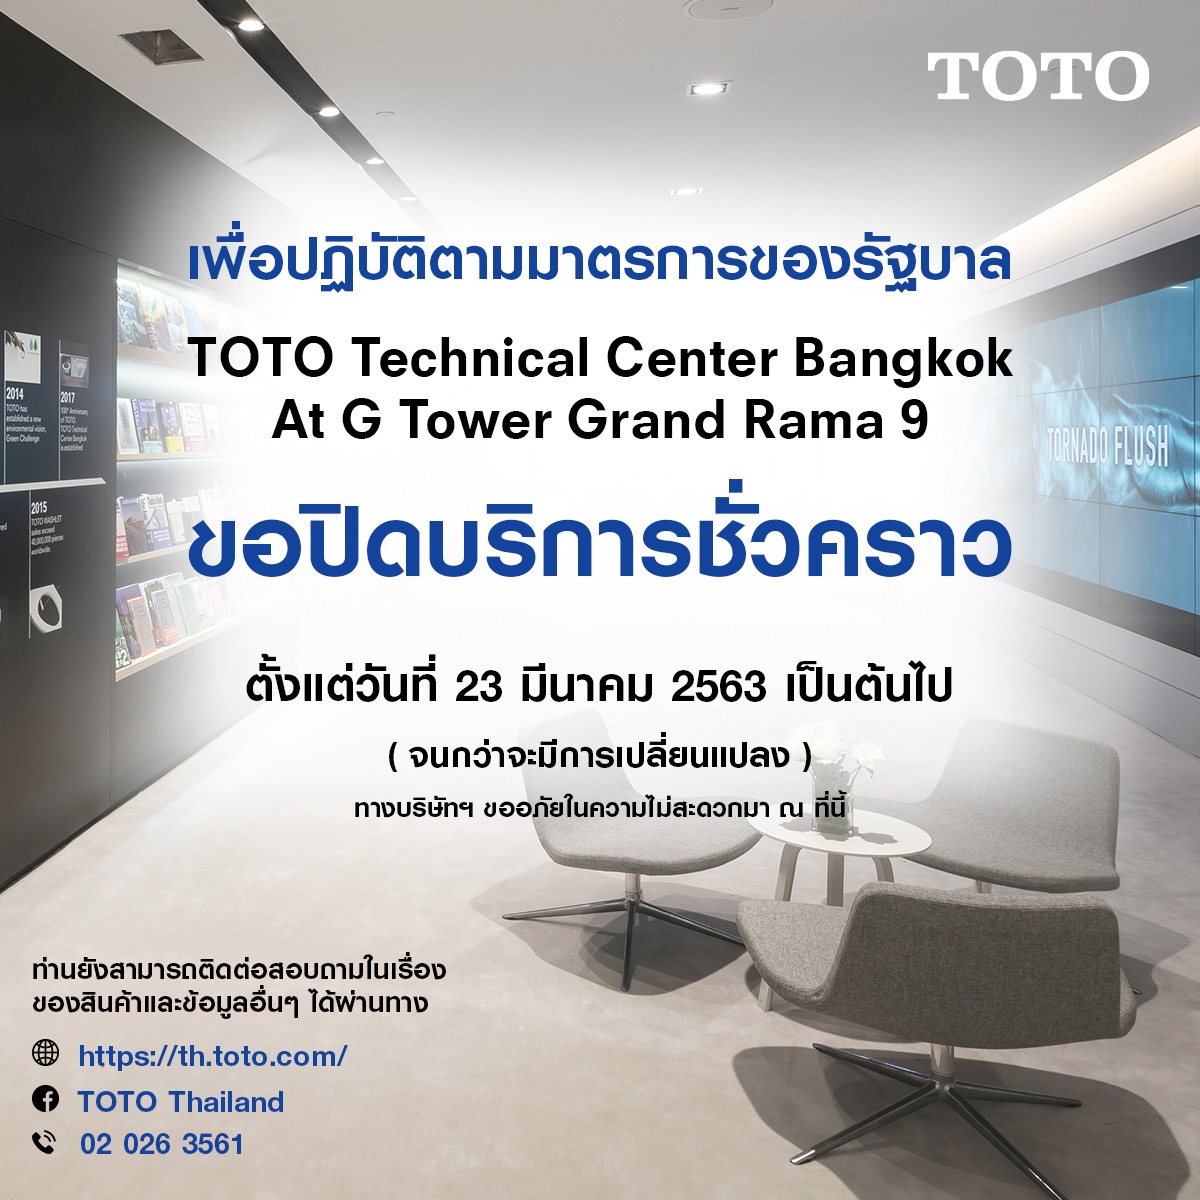 TOTO Technical Center Bangkok ขอปิดบริการชั่วคราว ตั้งแต่วันที่ 23 มีนาคม 2563 เป็นต้นไป (จนกว่าจะมีการเปลี่ยนแปลง) 1